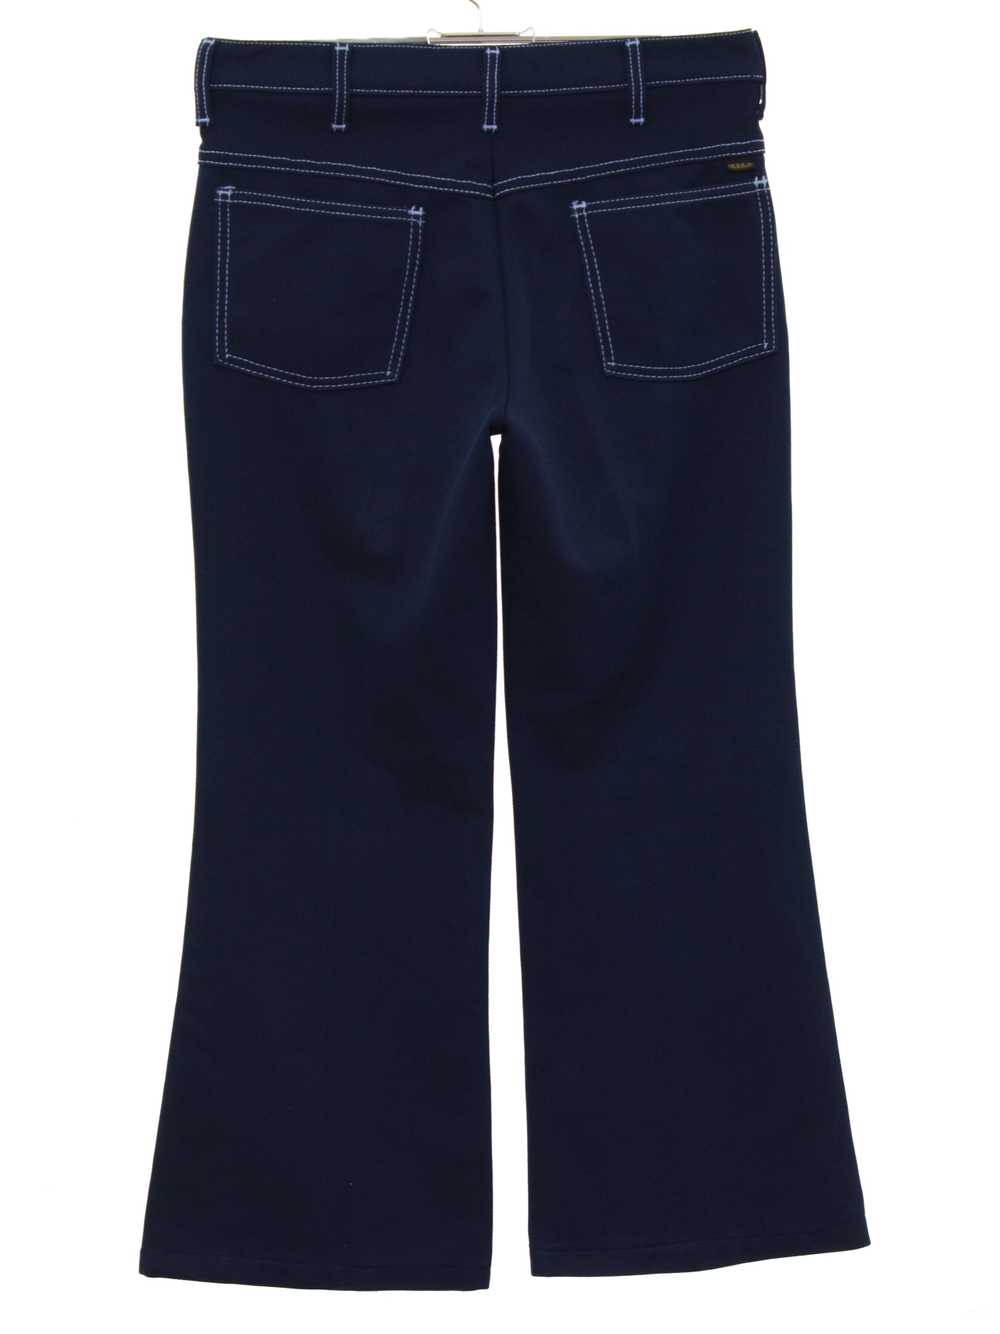 1970's Farah Unisex Knit Bellbottom Pants - image 1